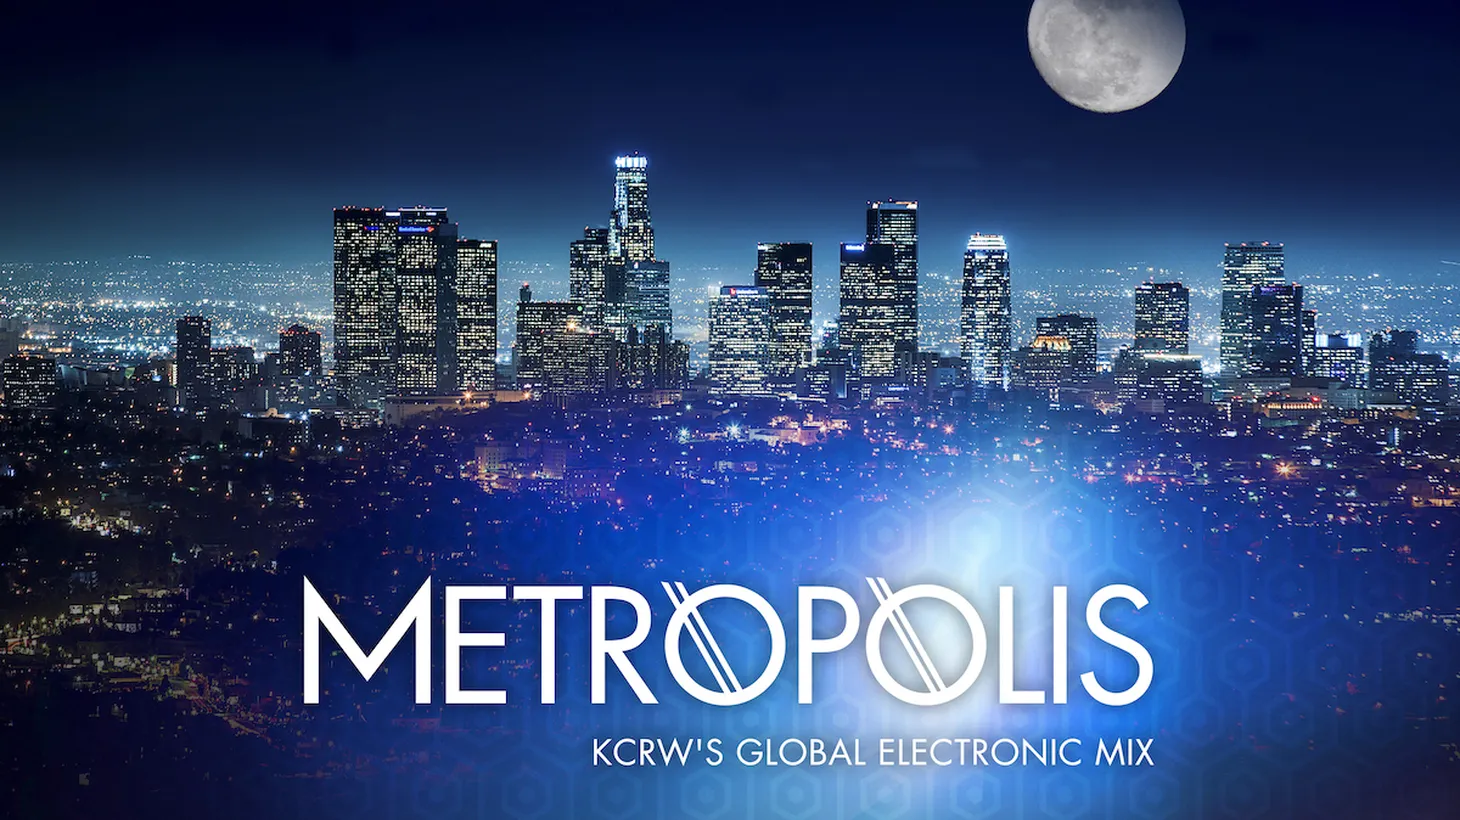 Metropolis playlist February 11, 2023.